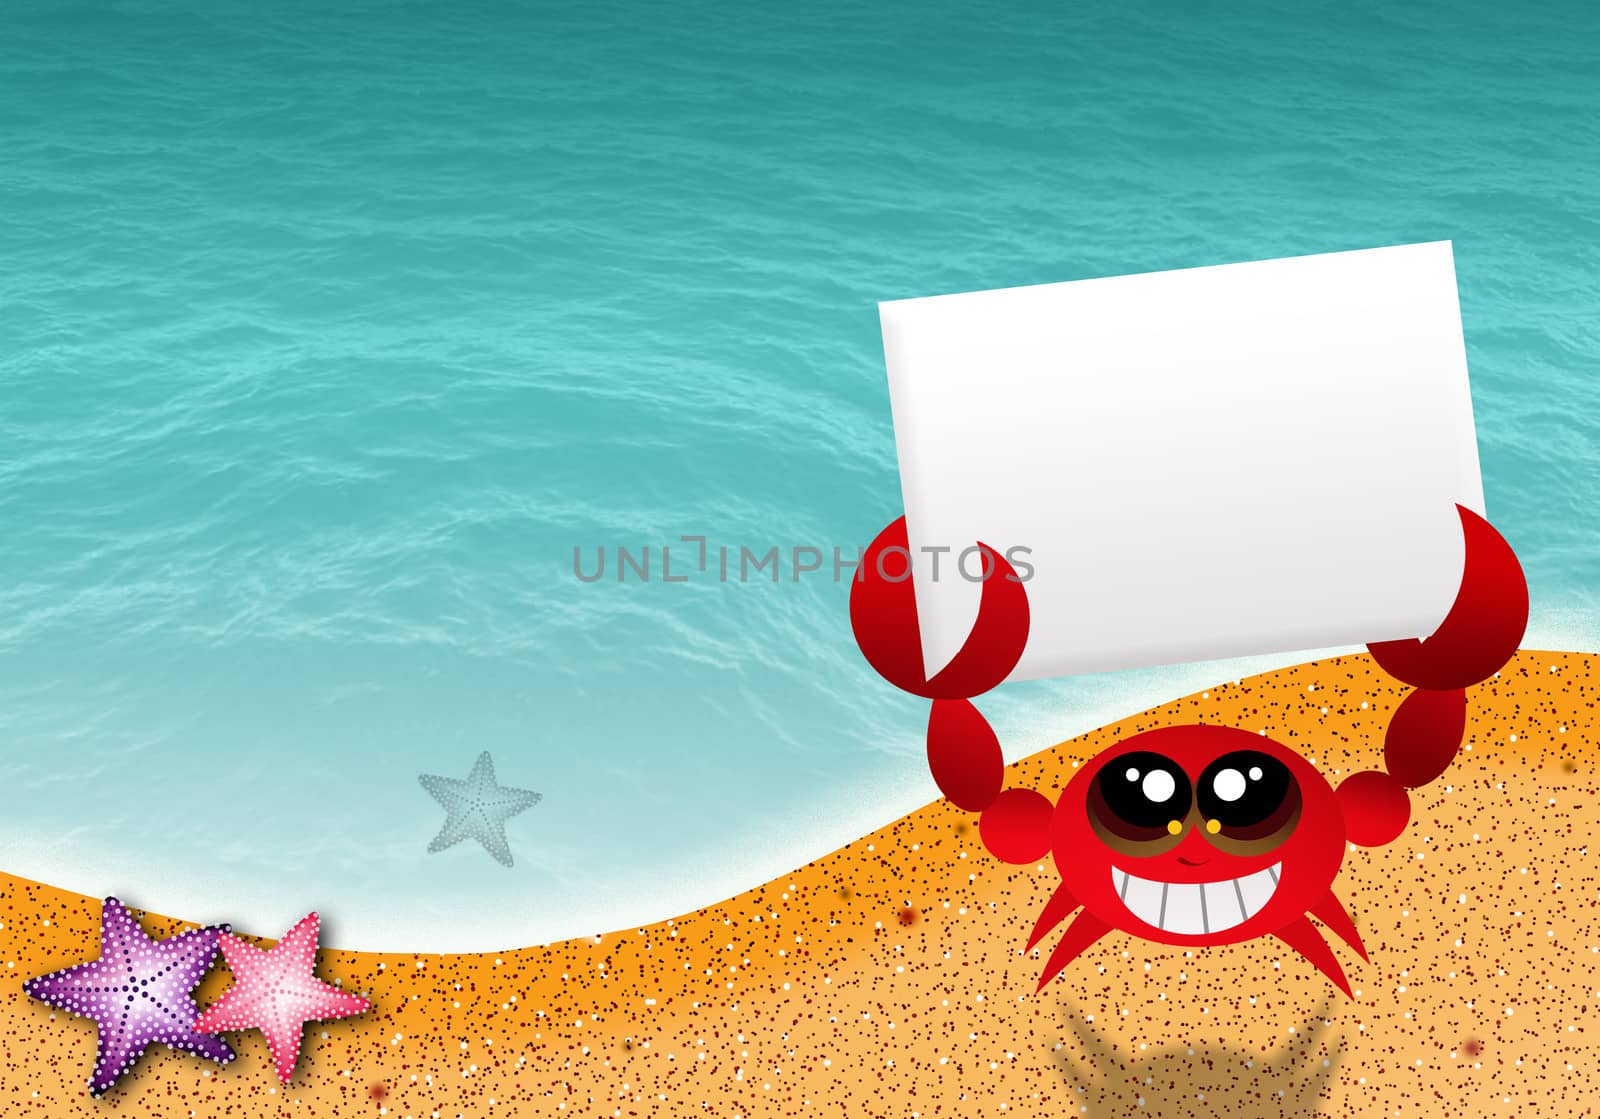 crab on the beach